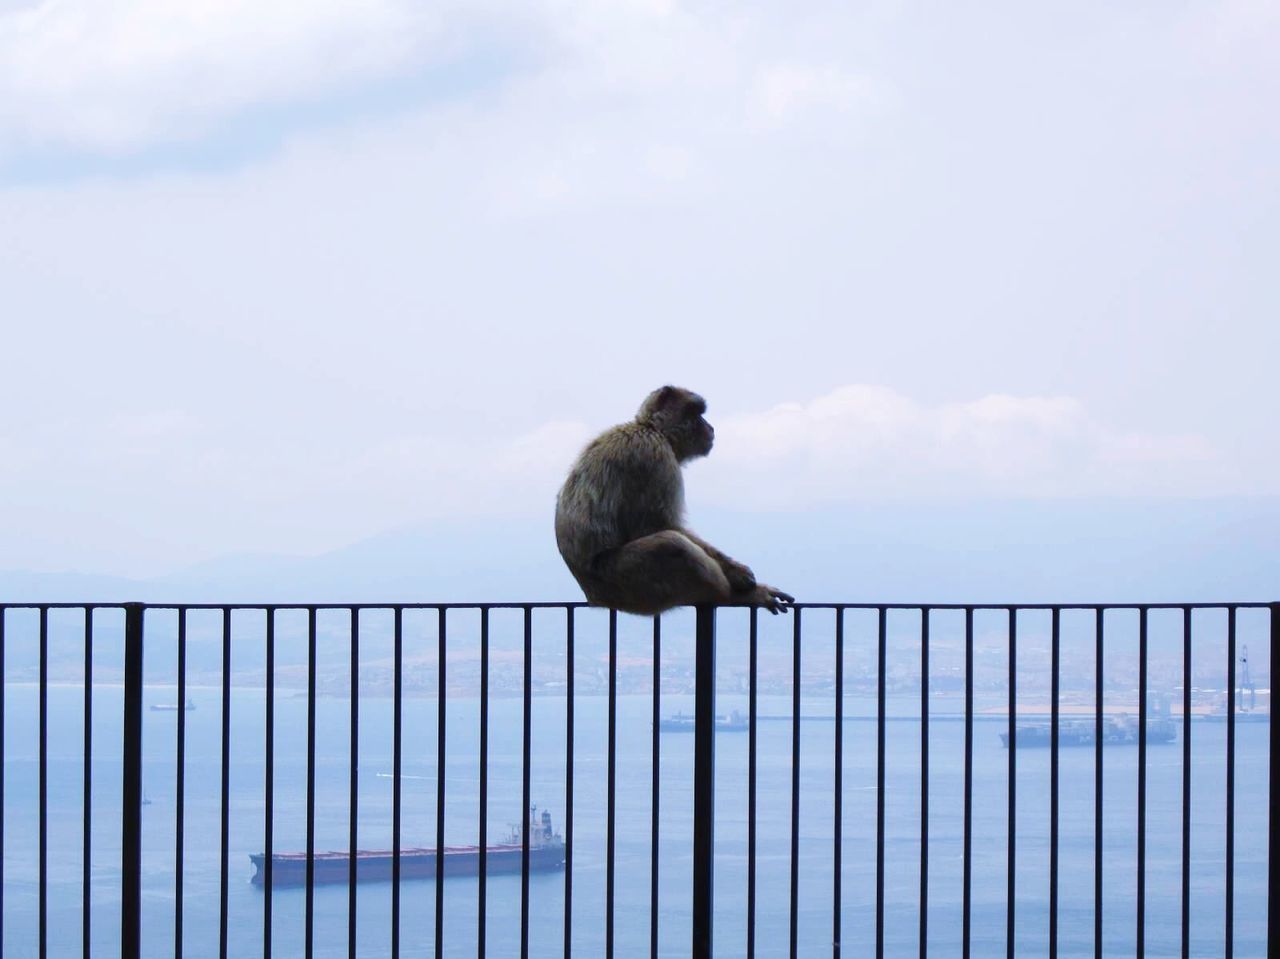 Monkey sitting on railing by sea against cloudy sky